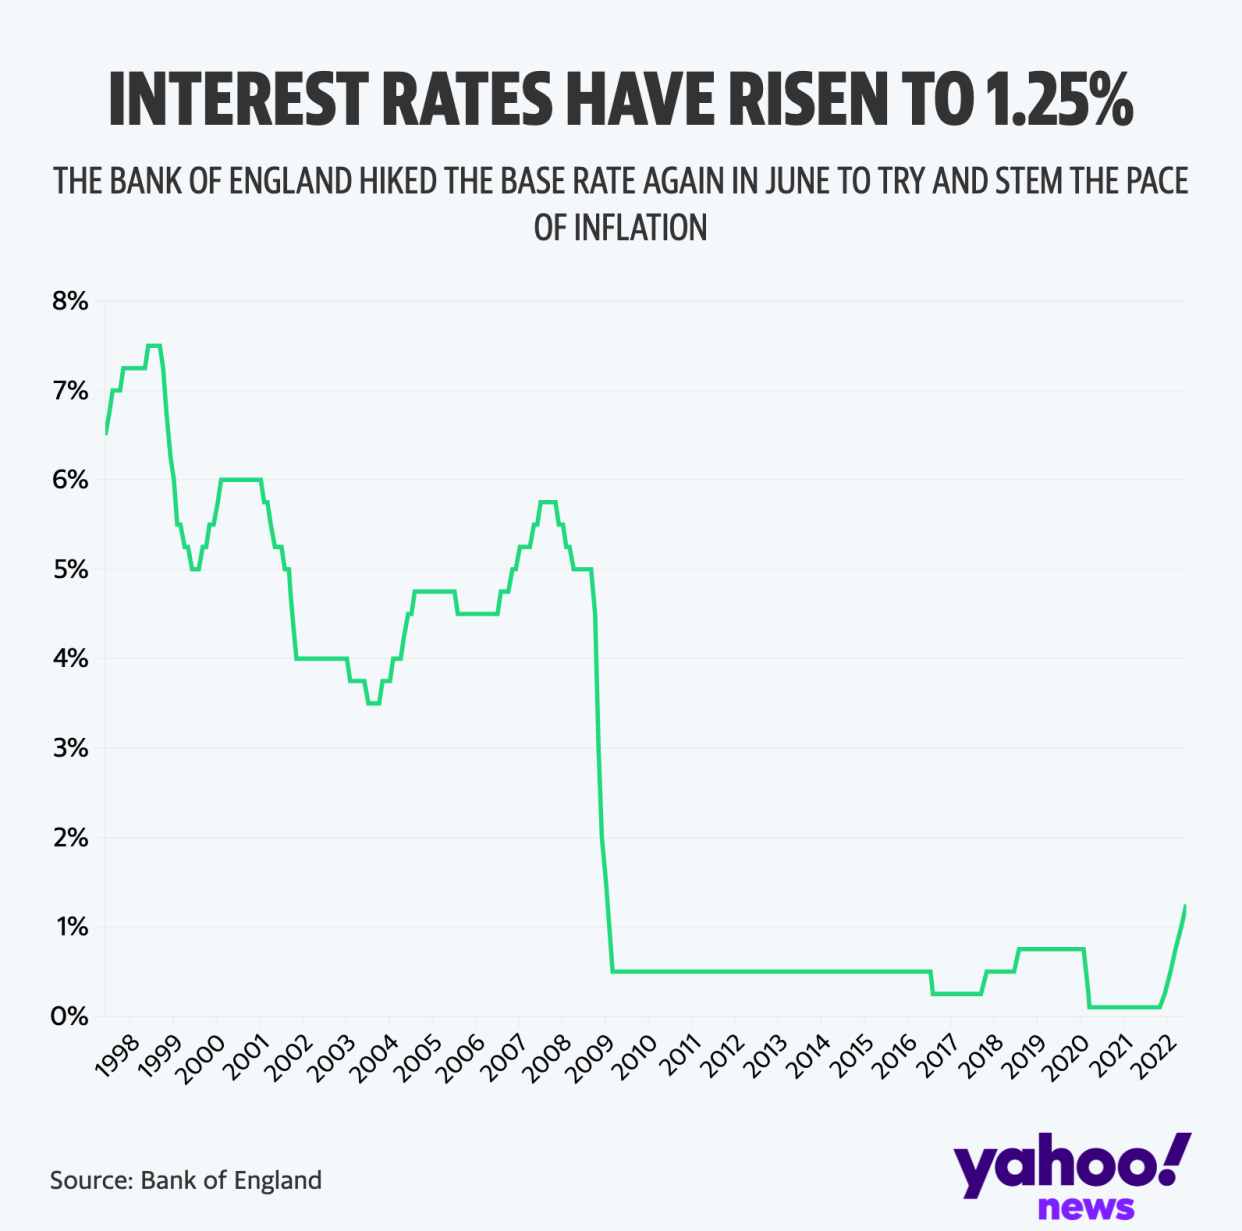 UK interest rates